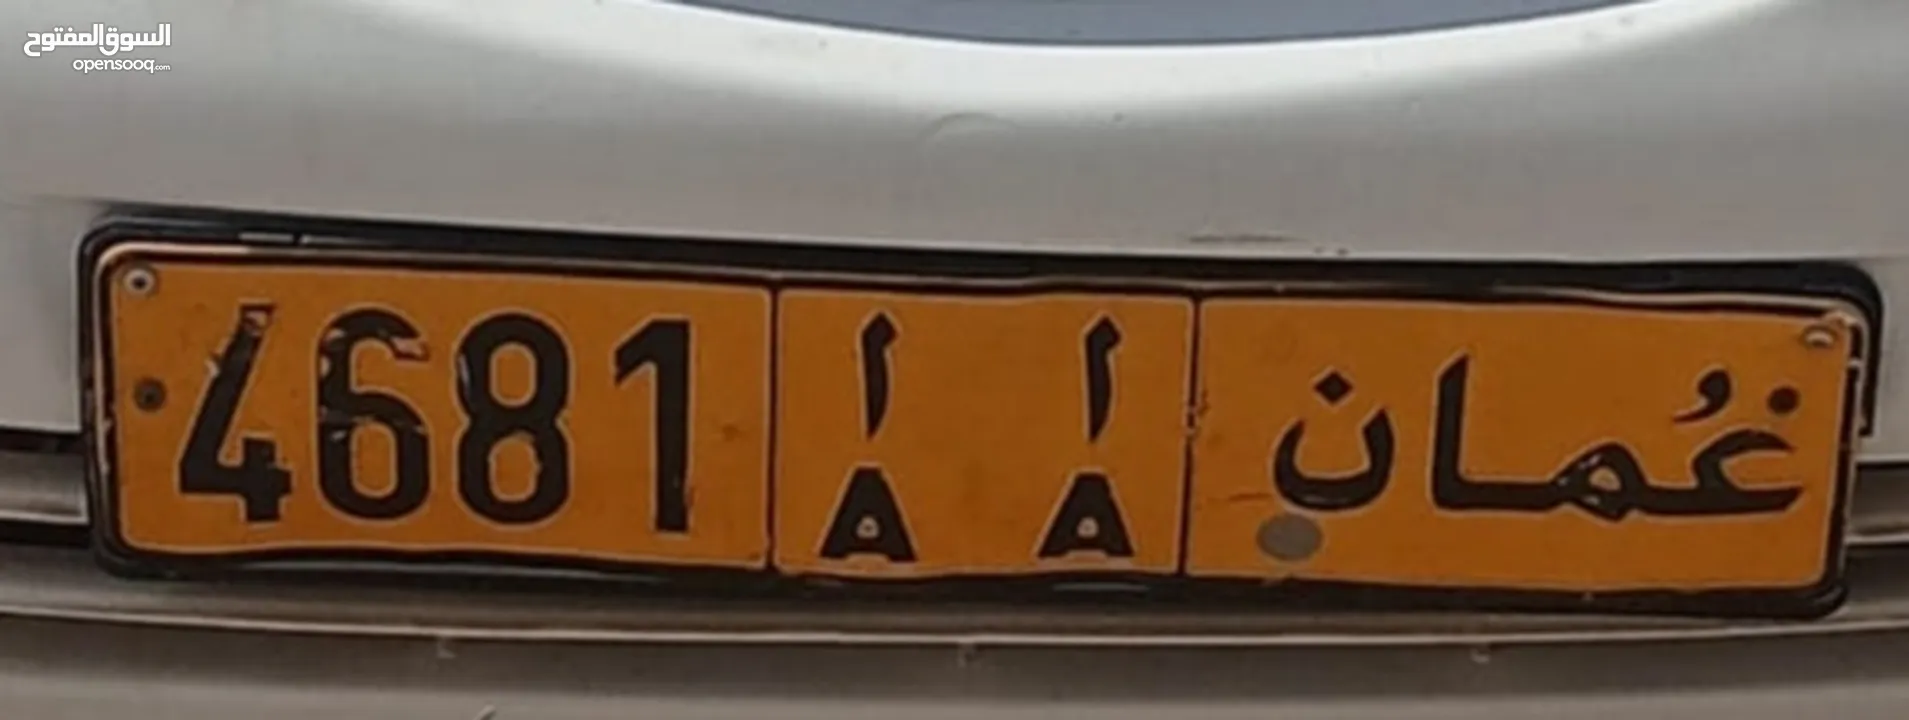 urgent sale car plate number